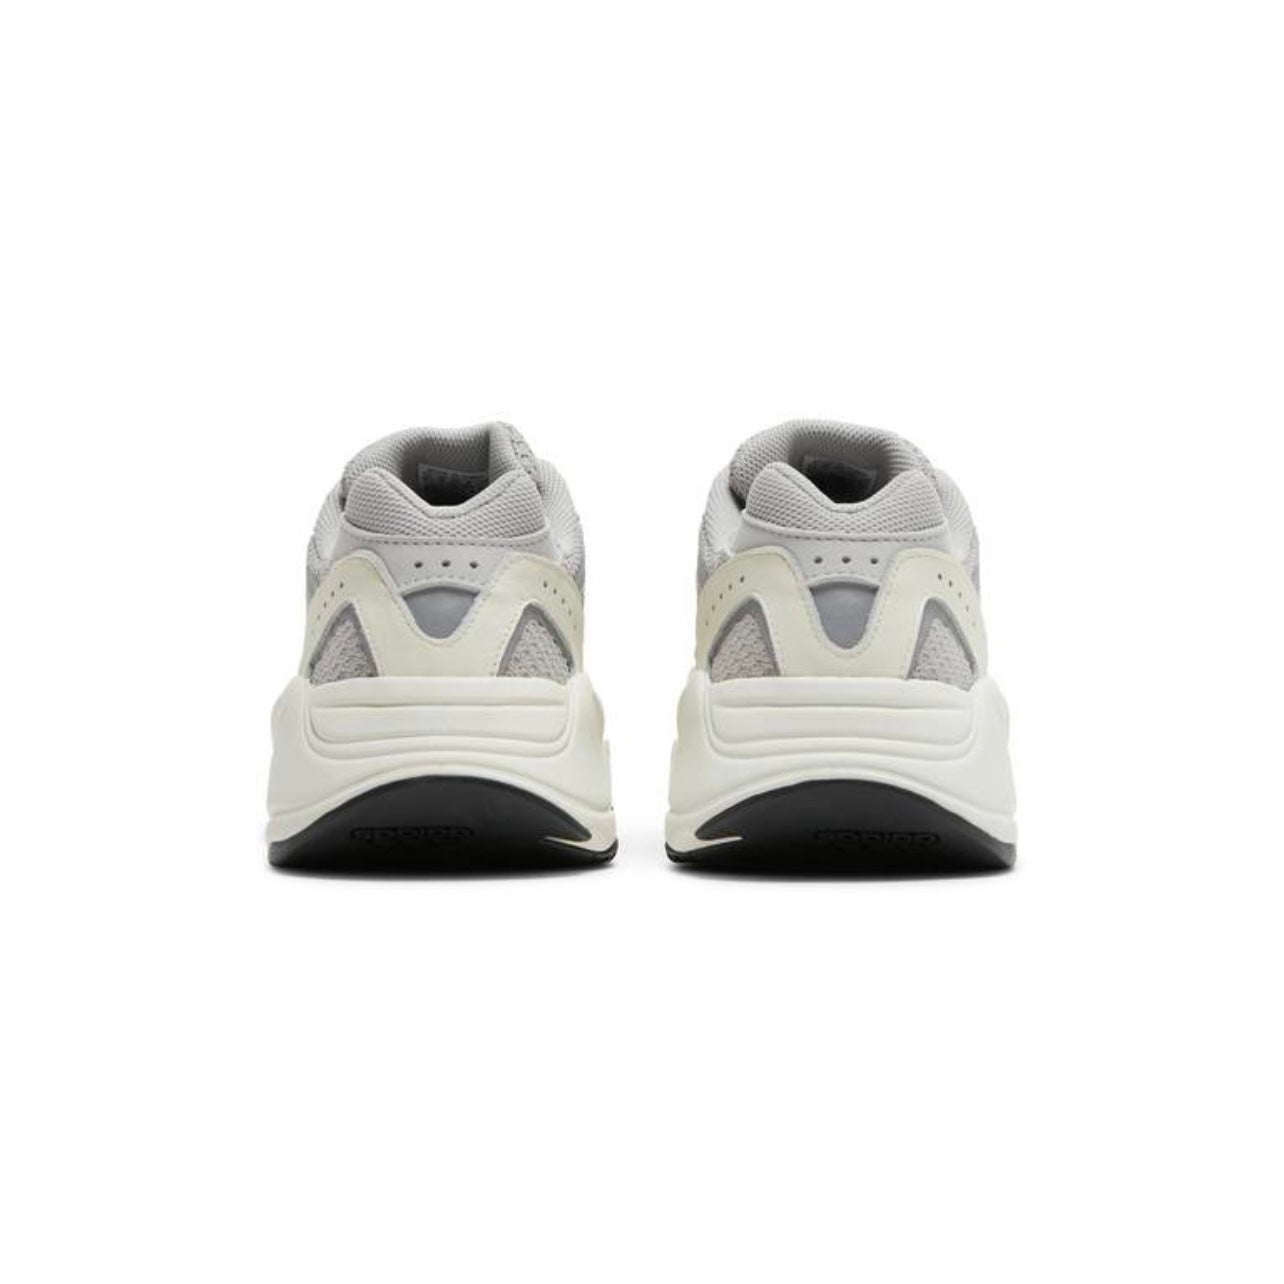 Adidas Yeezy Boost 700 V2 "Static"